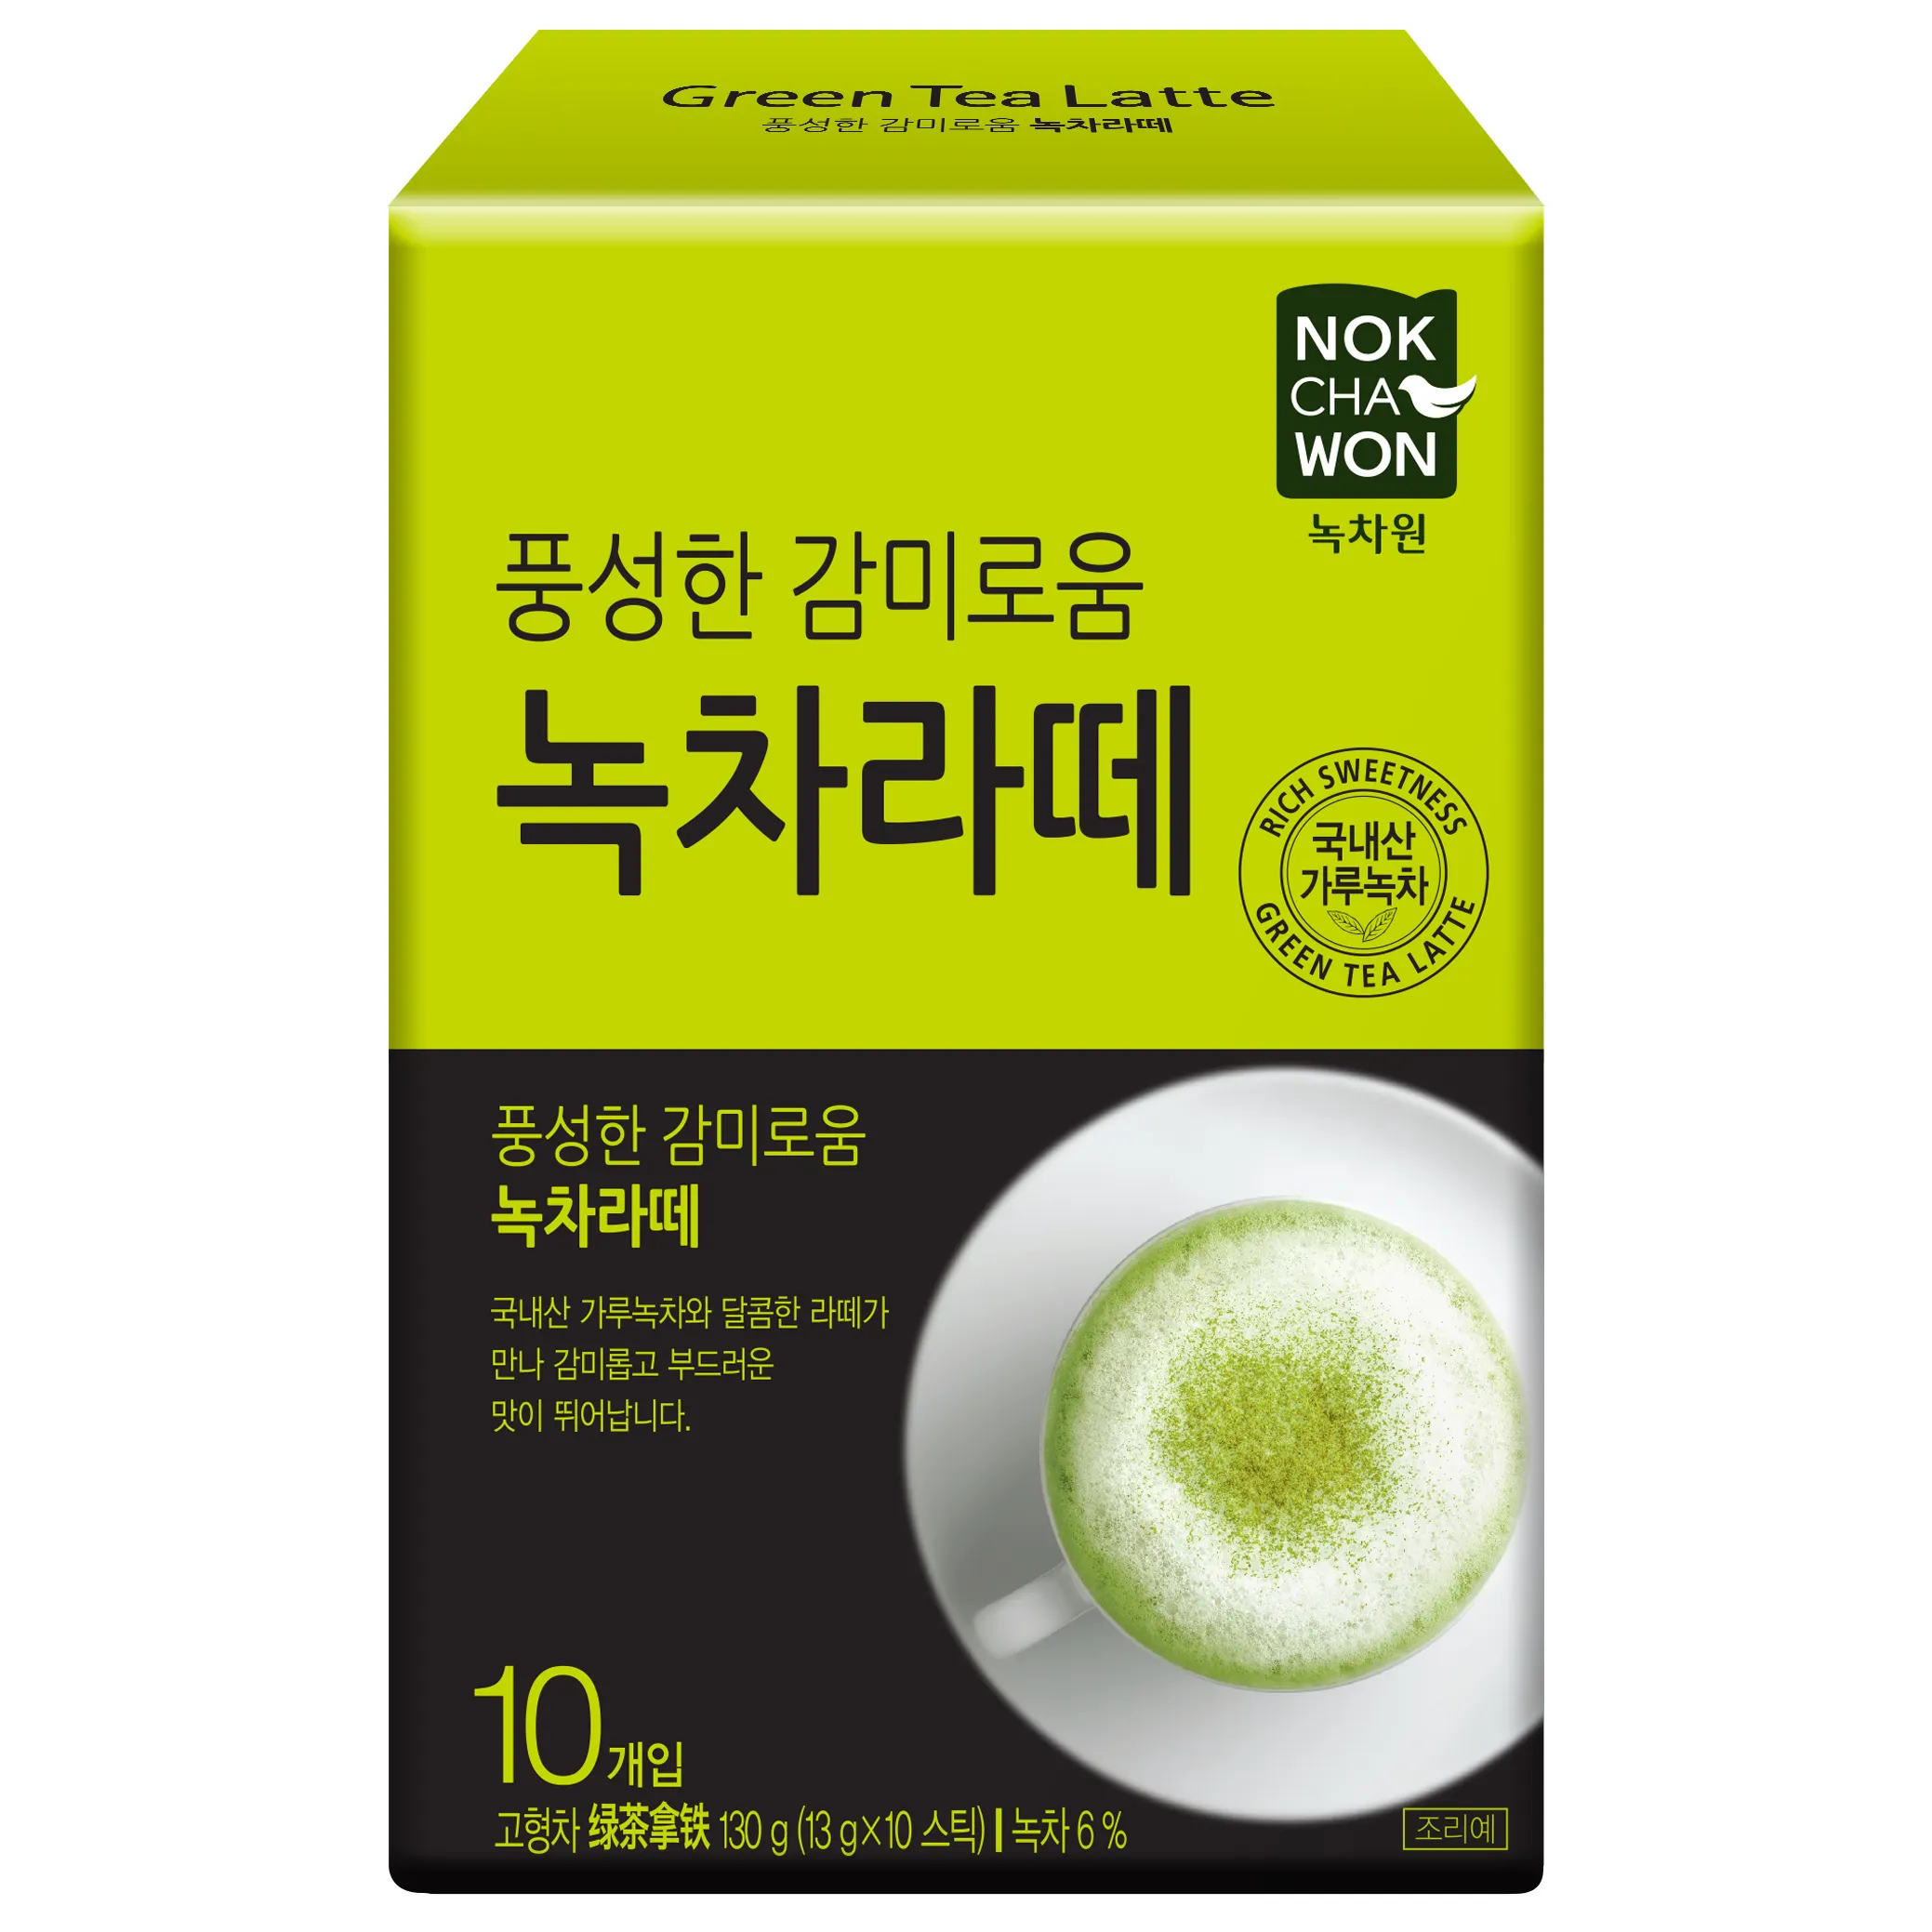 Green tea latte food and beverage equipment made in KOREA packaging food easy to drink good taste well made